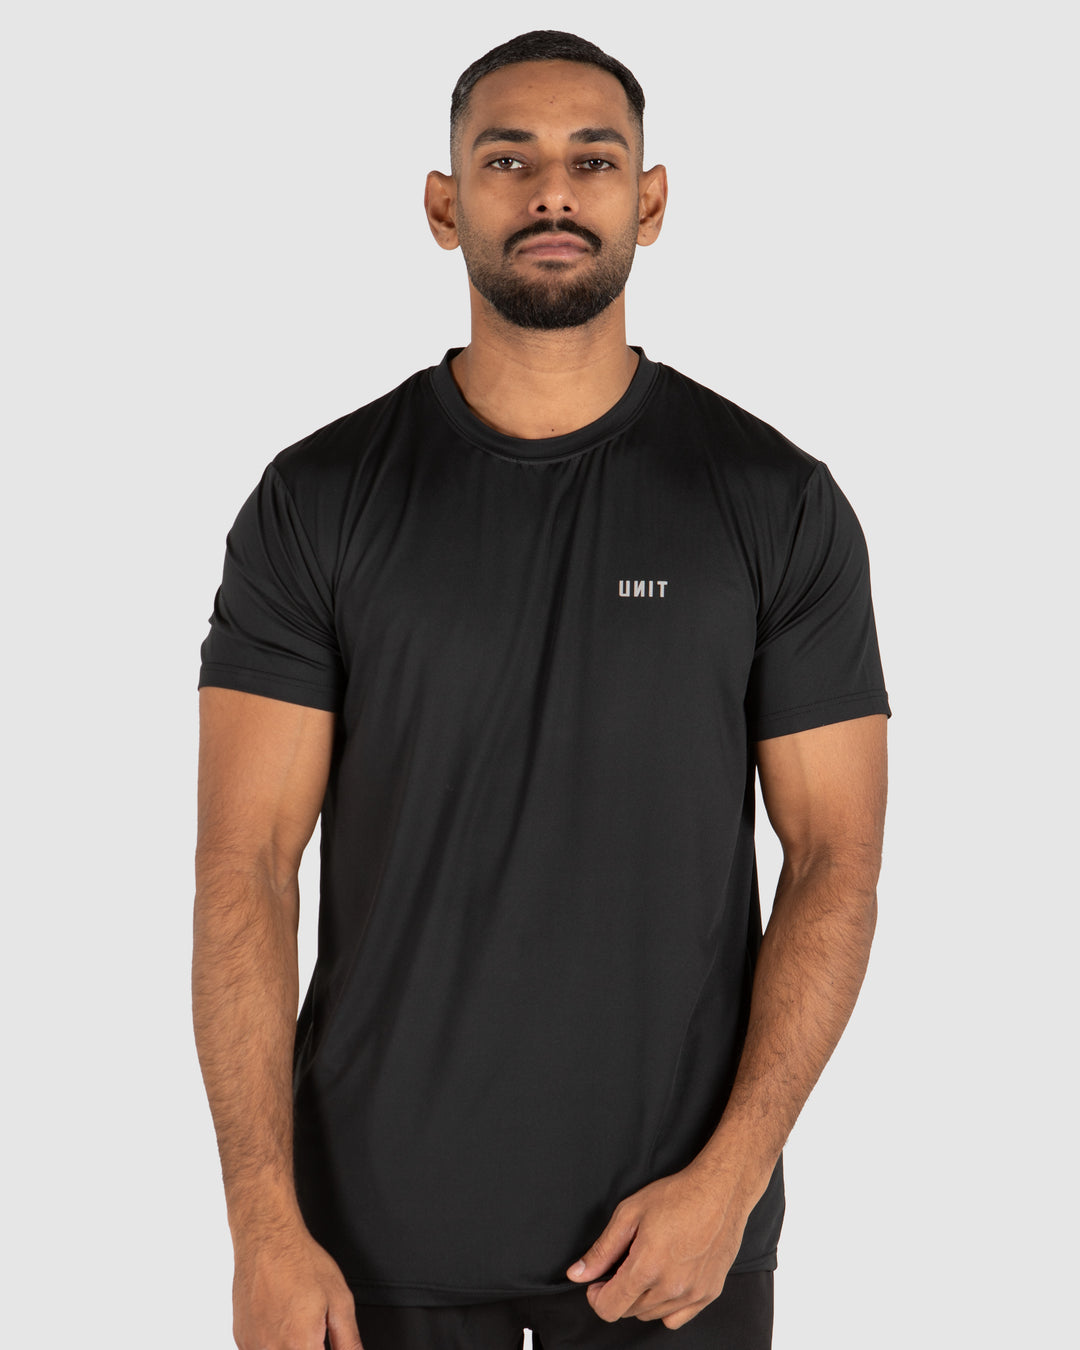 UNIT Mens Pro Flex Performance T-Shirt